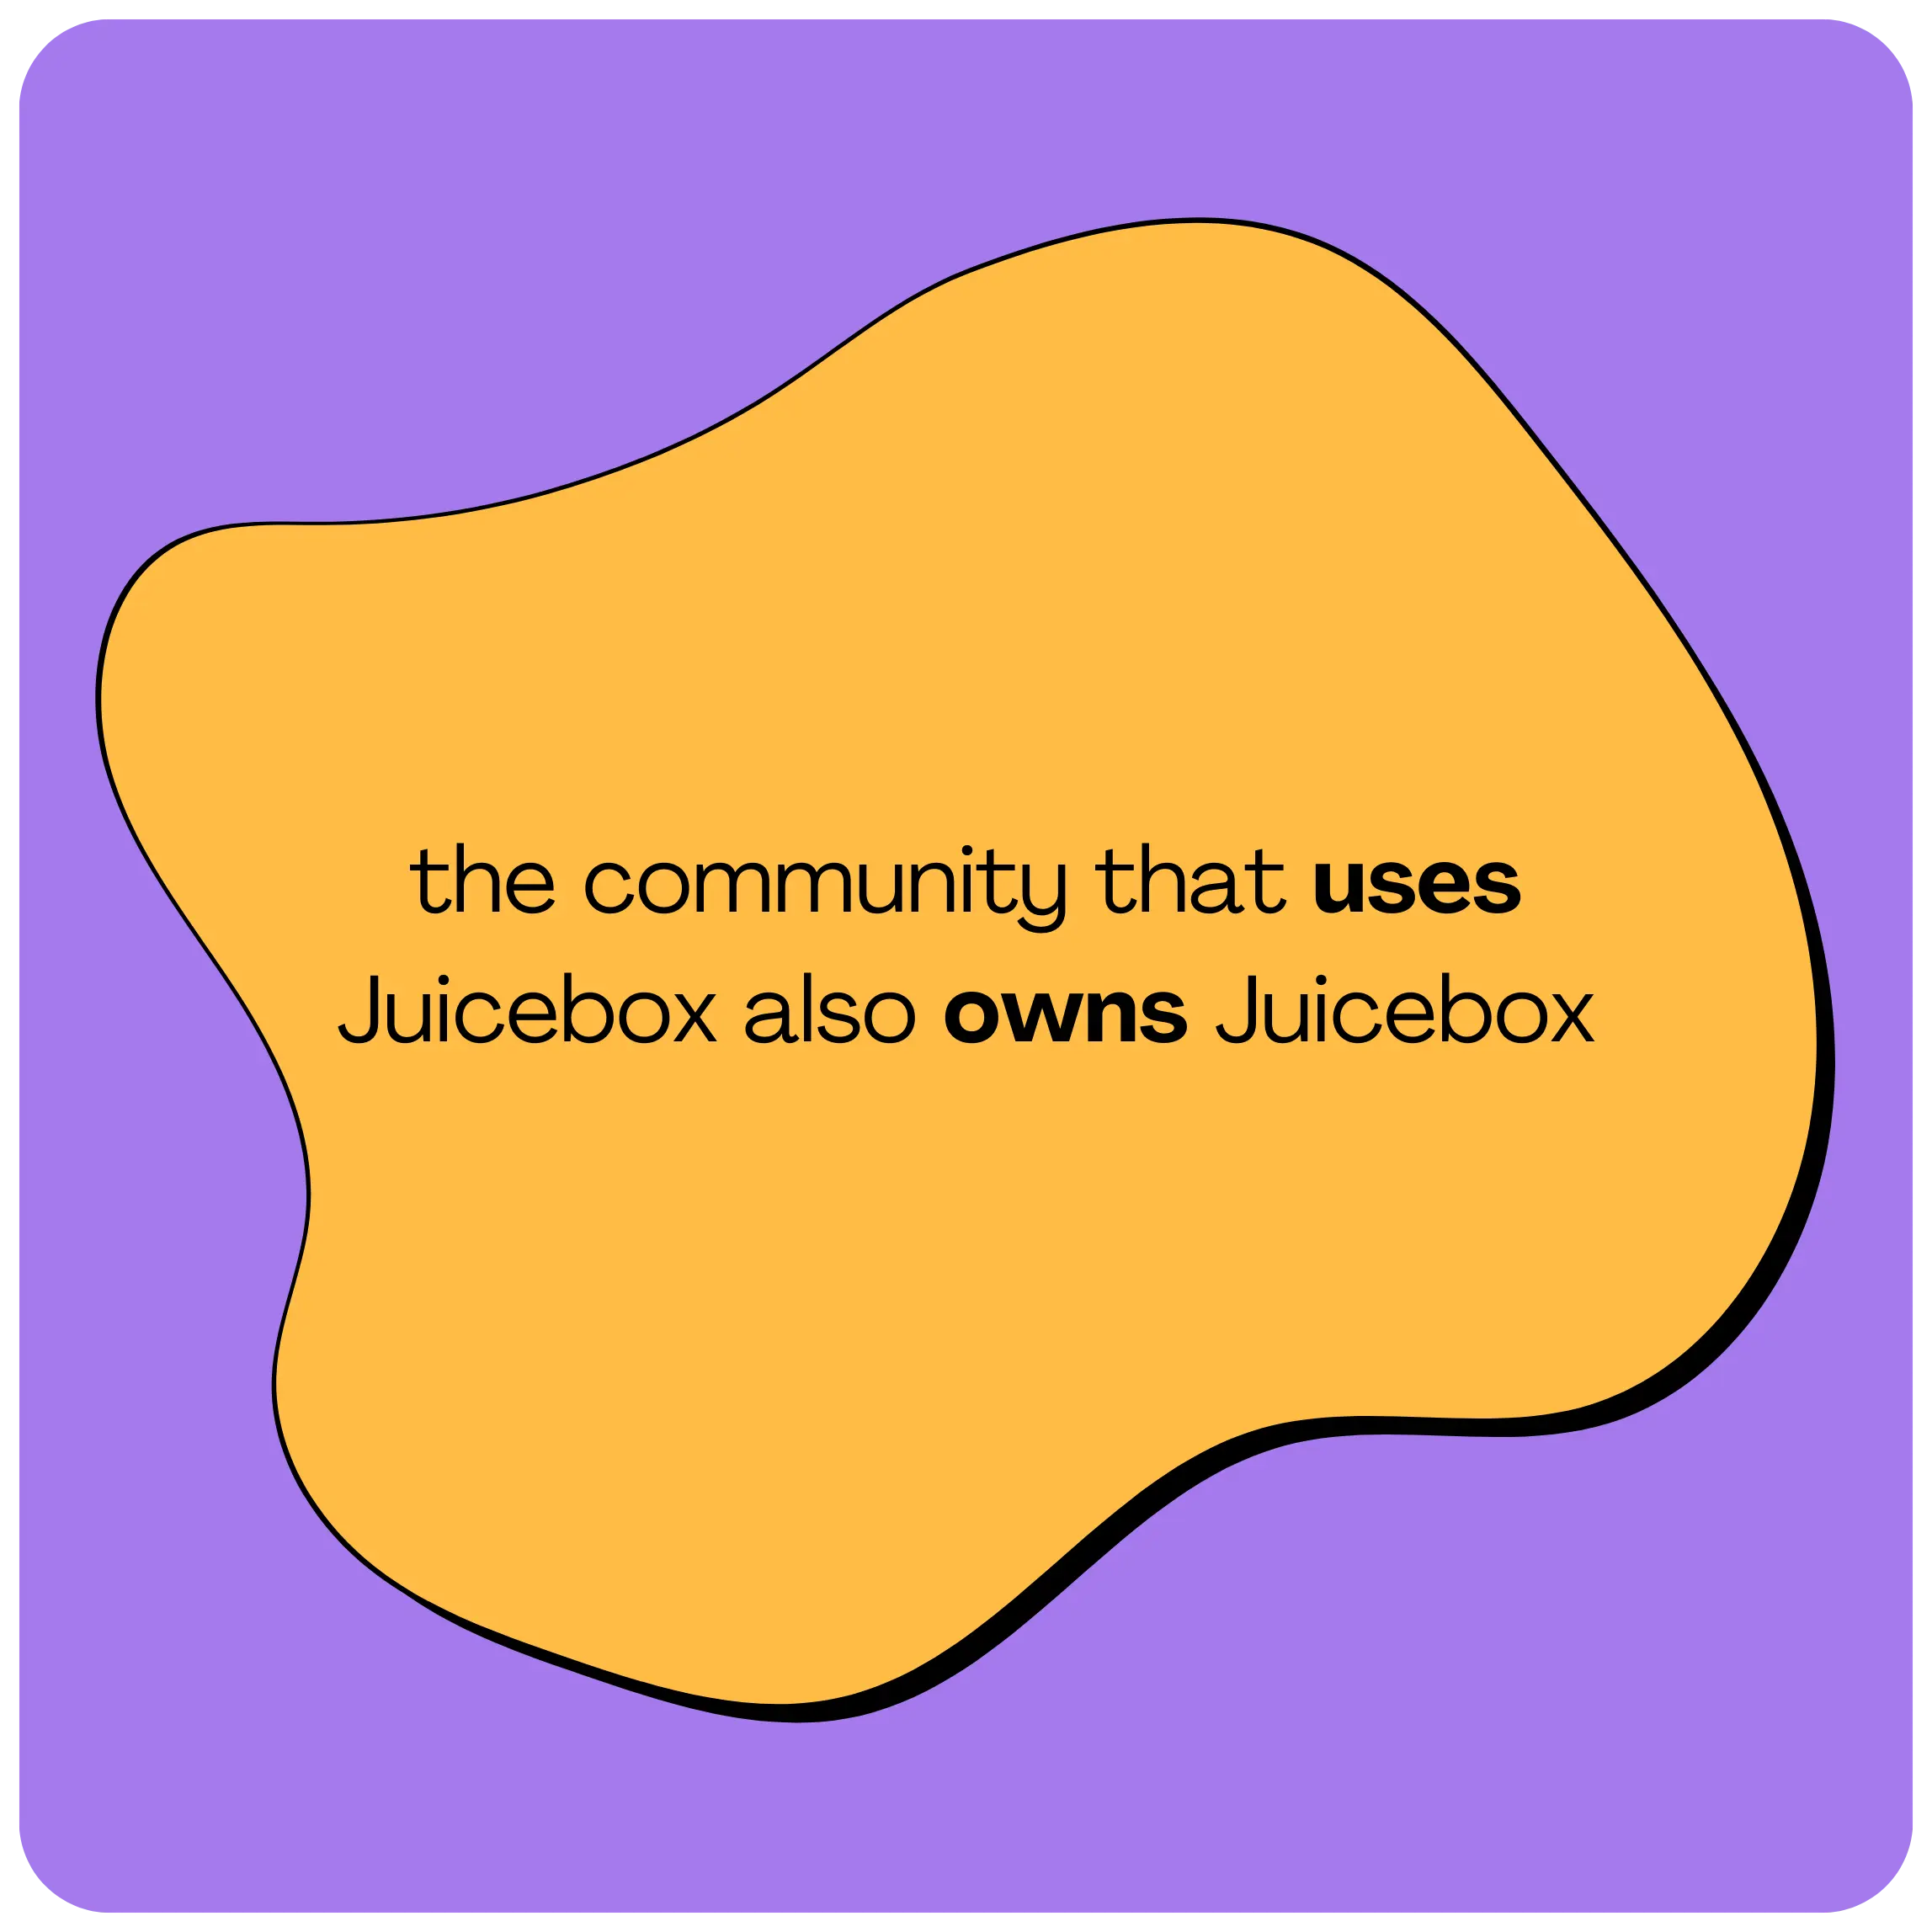 Juicebox is community owned